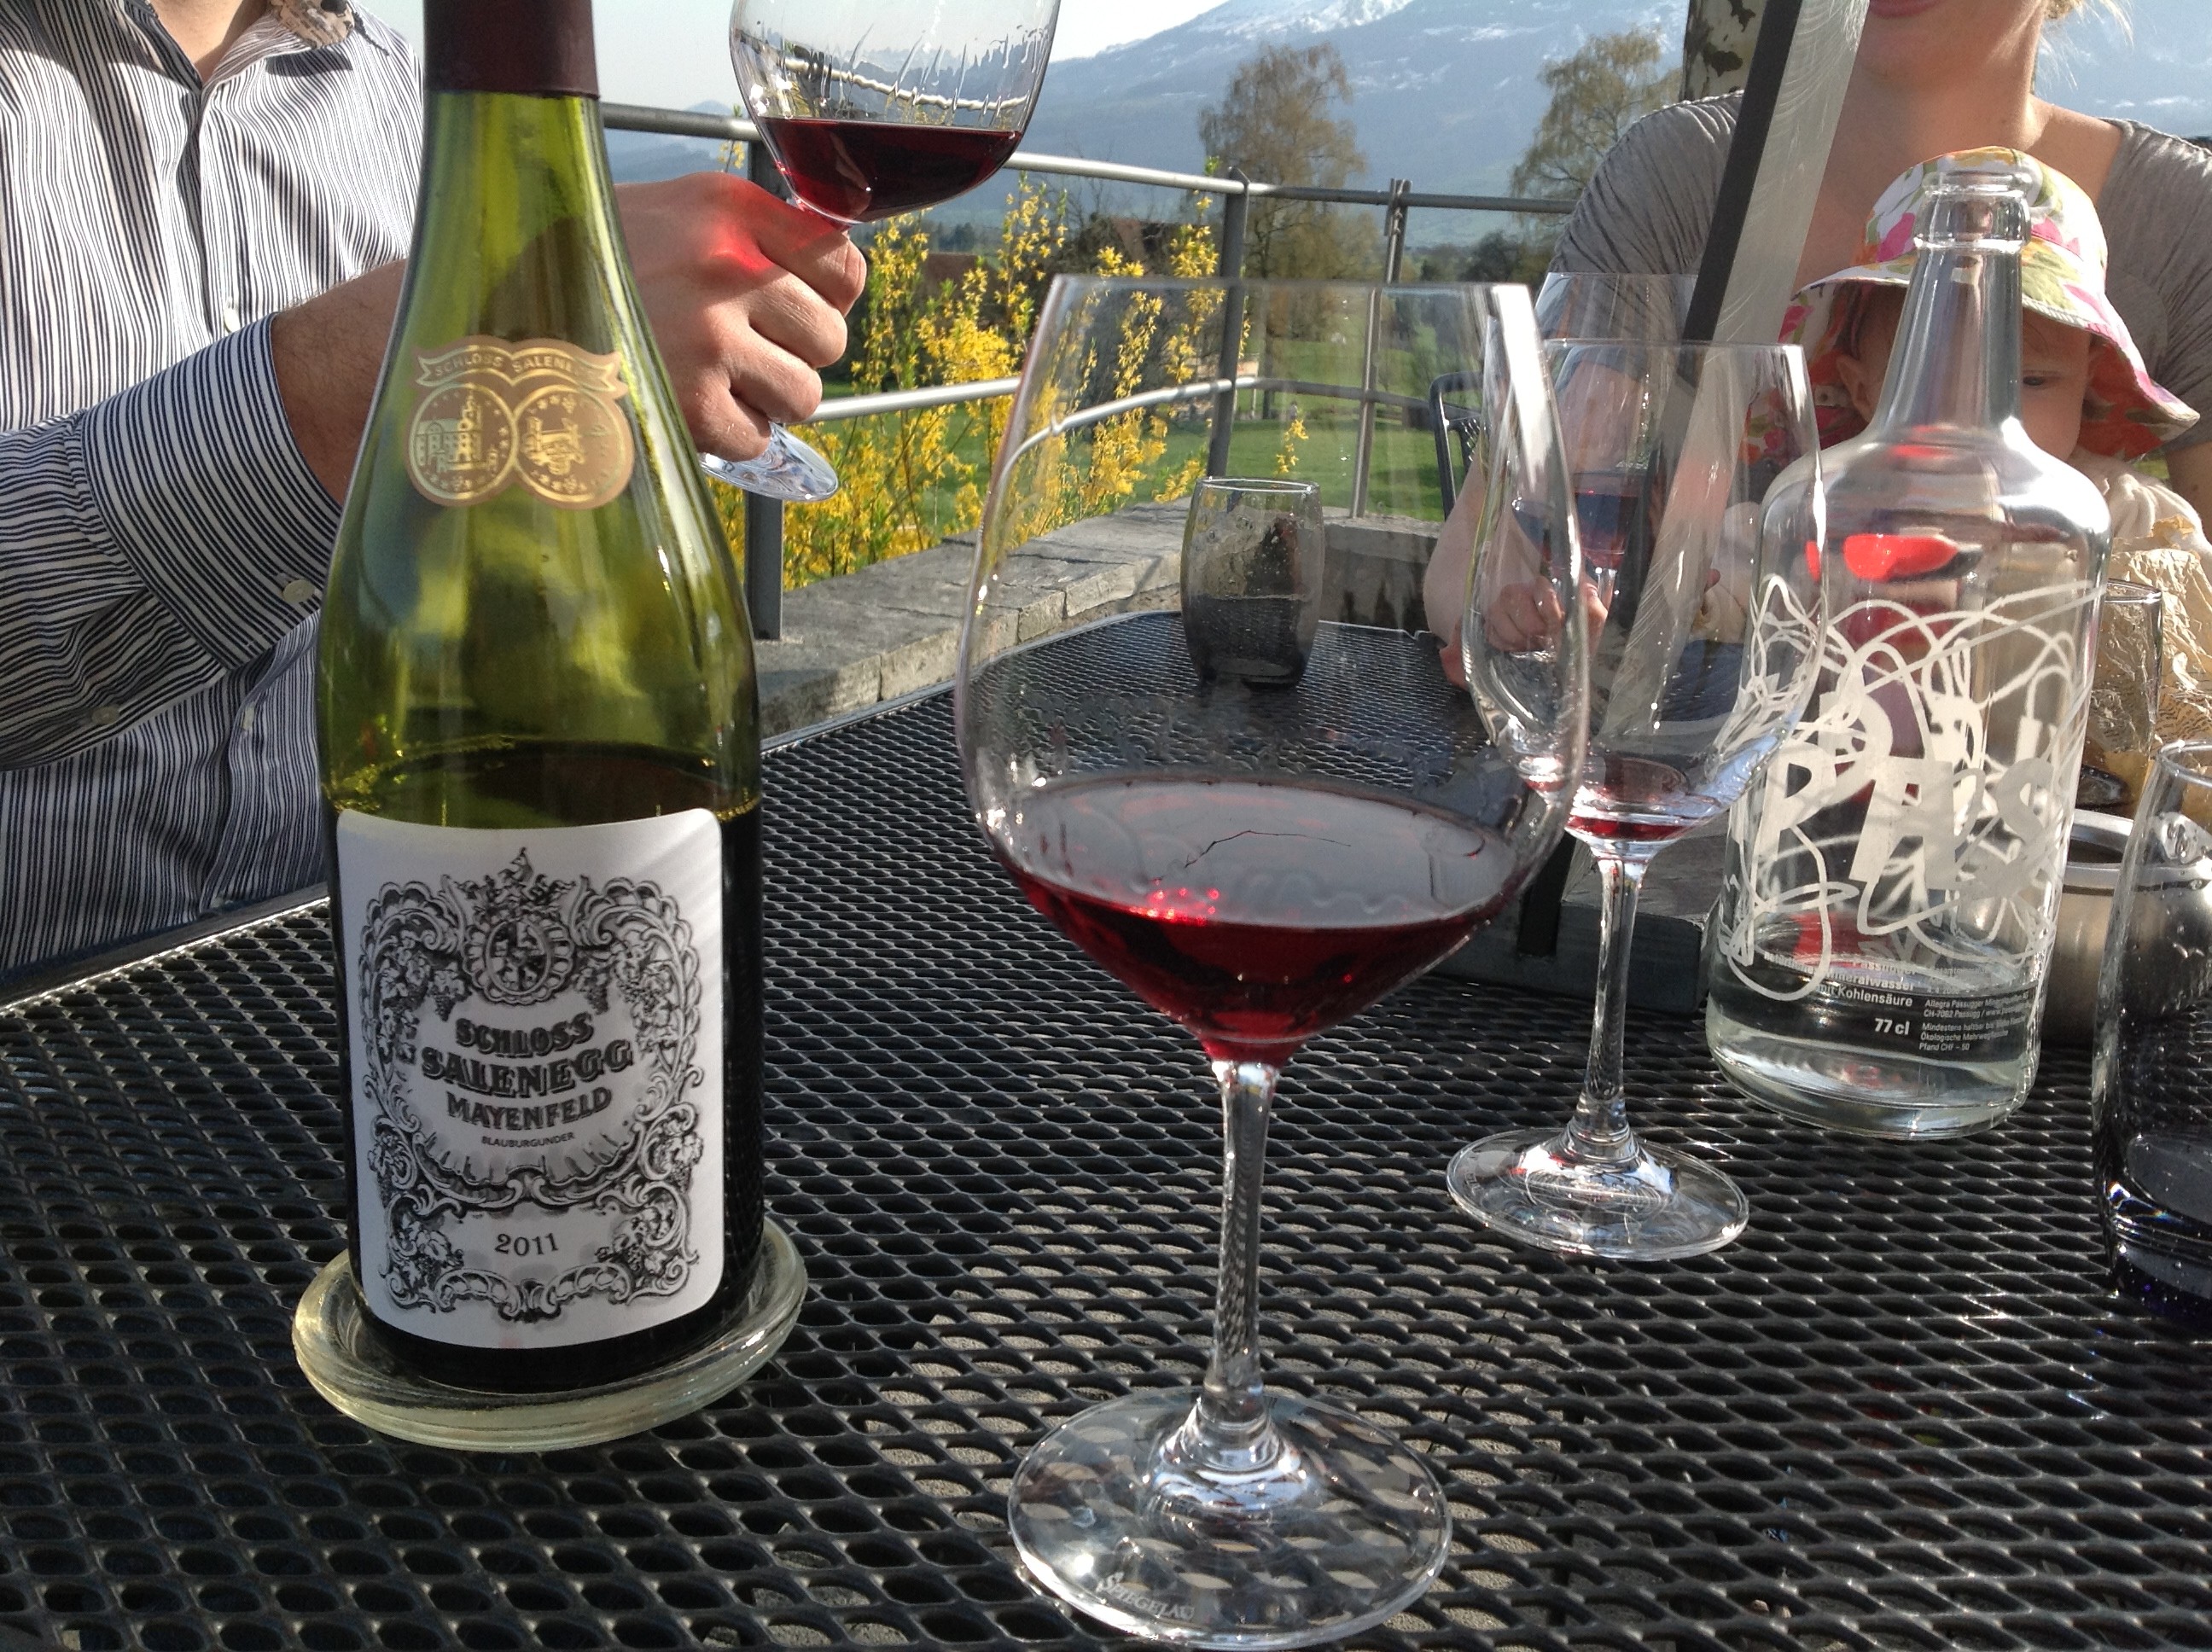 Enjoying a bottle of Schloss Salenegg 20111 Pinot Noir (Blauburgunder) (Photo Patrick Hunt 2014)